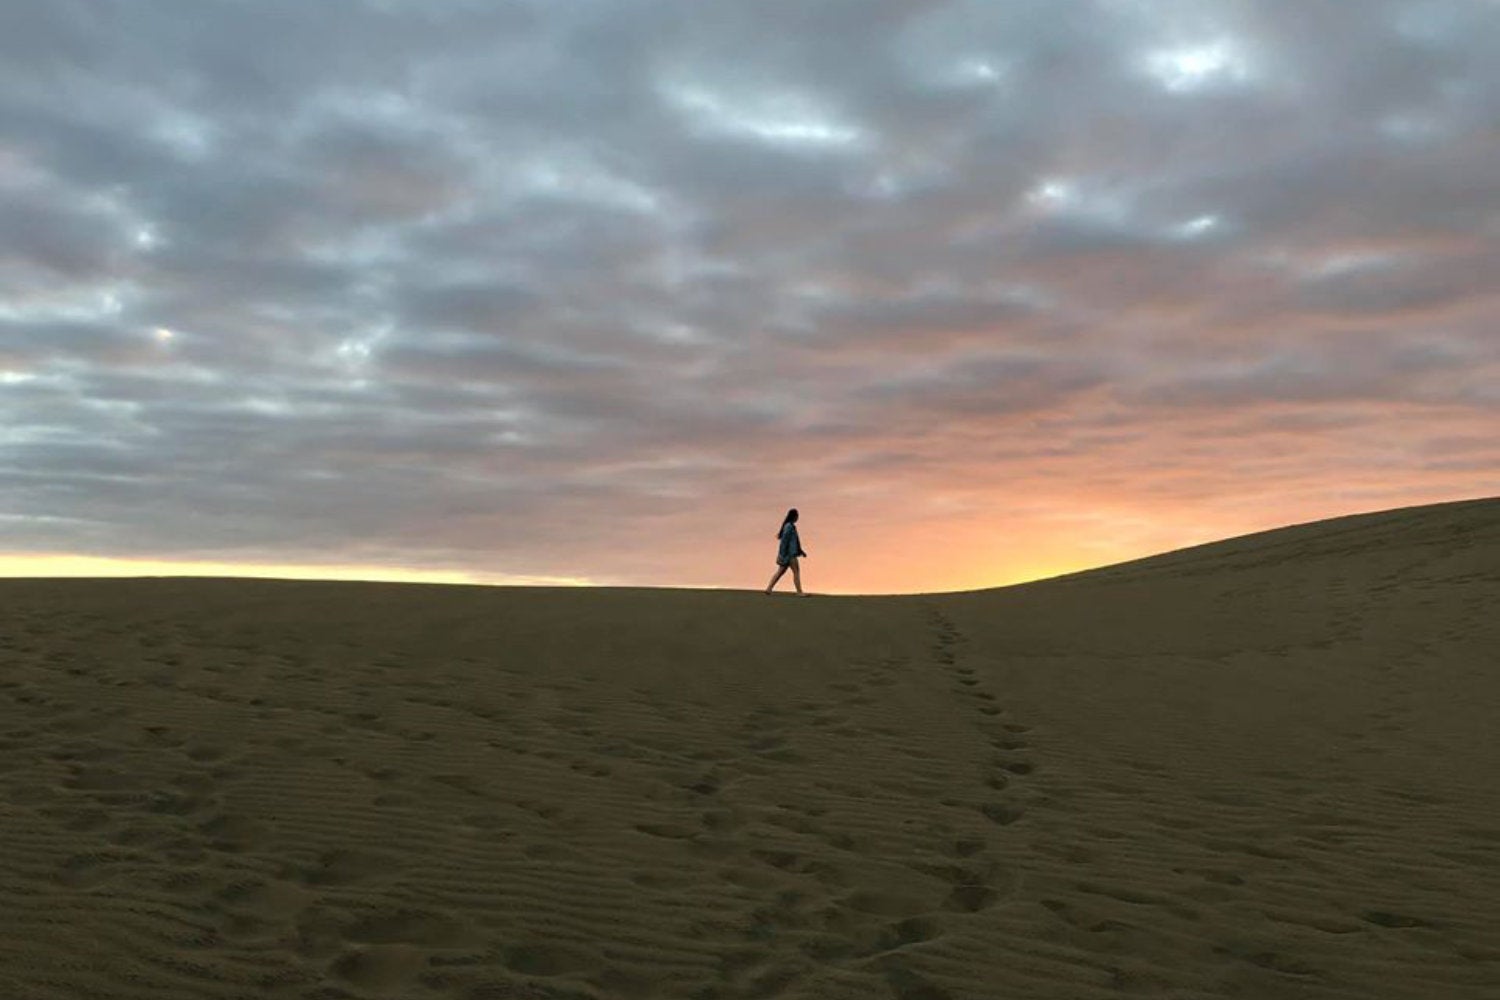 Jenna Ziegelmayer an award recipient walking in a desert landscape in Spain